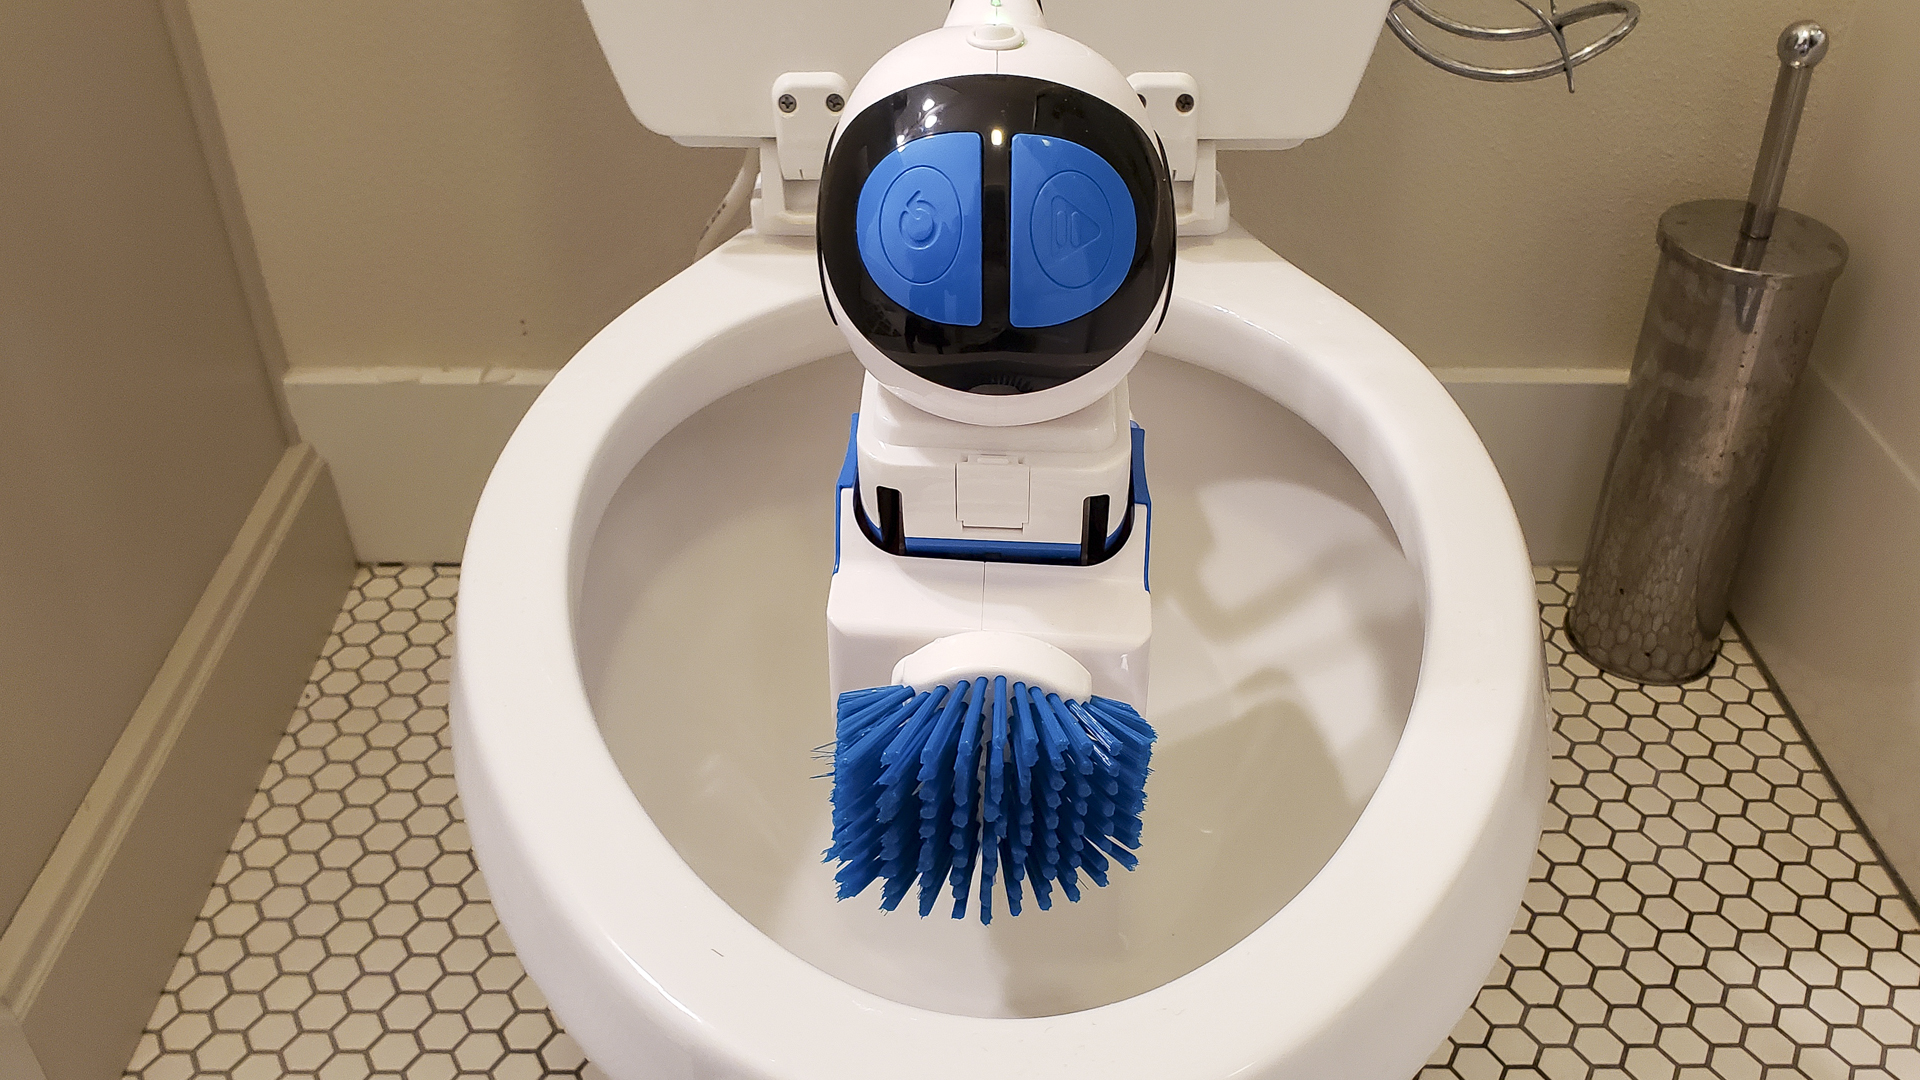 https://www.digitaltrends.com/wp-content/uploads/2019/03/giddel-toilet-cleaning-robot-7158.jpg?fit=1920%2C1080&p=1